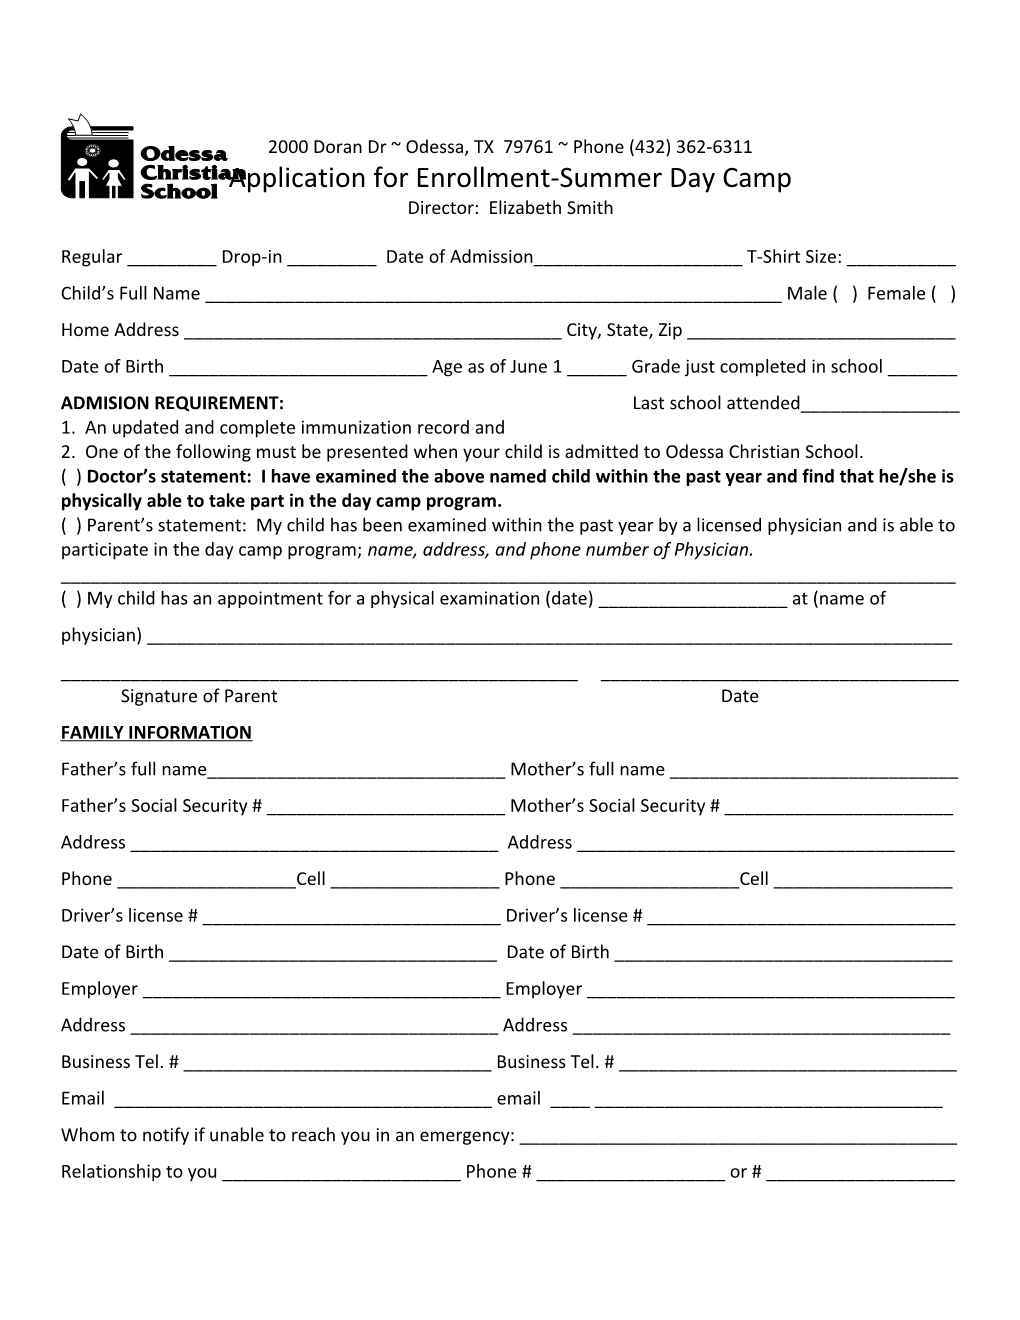 Application for Enrollment-Summer Day Camp